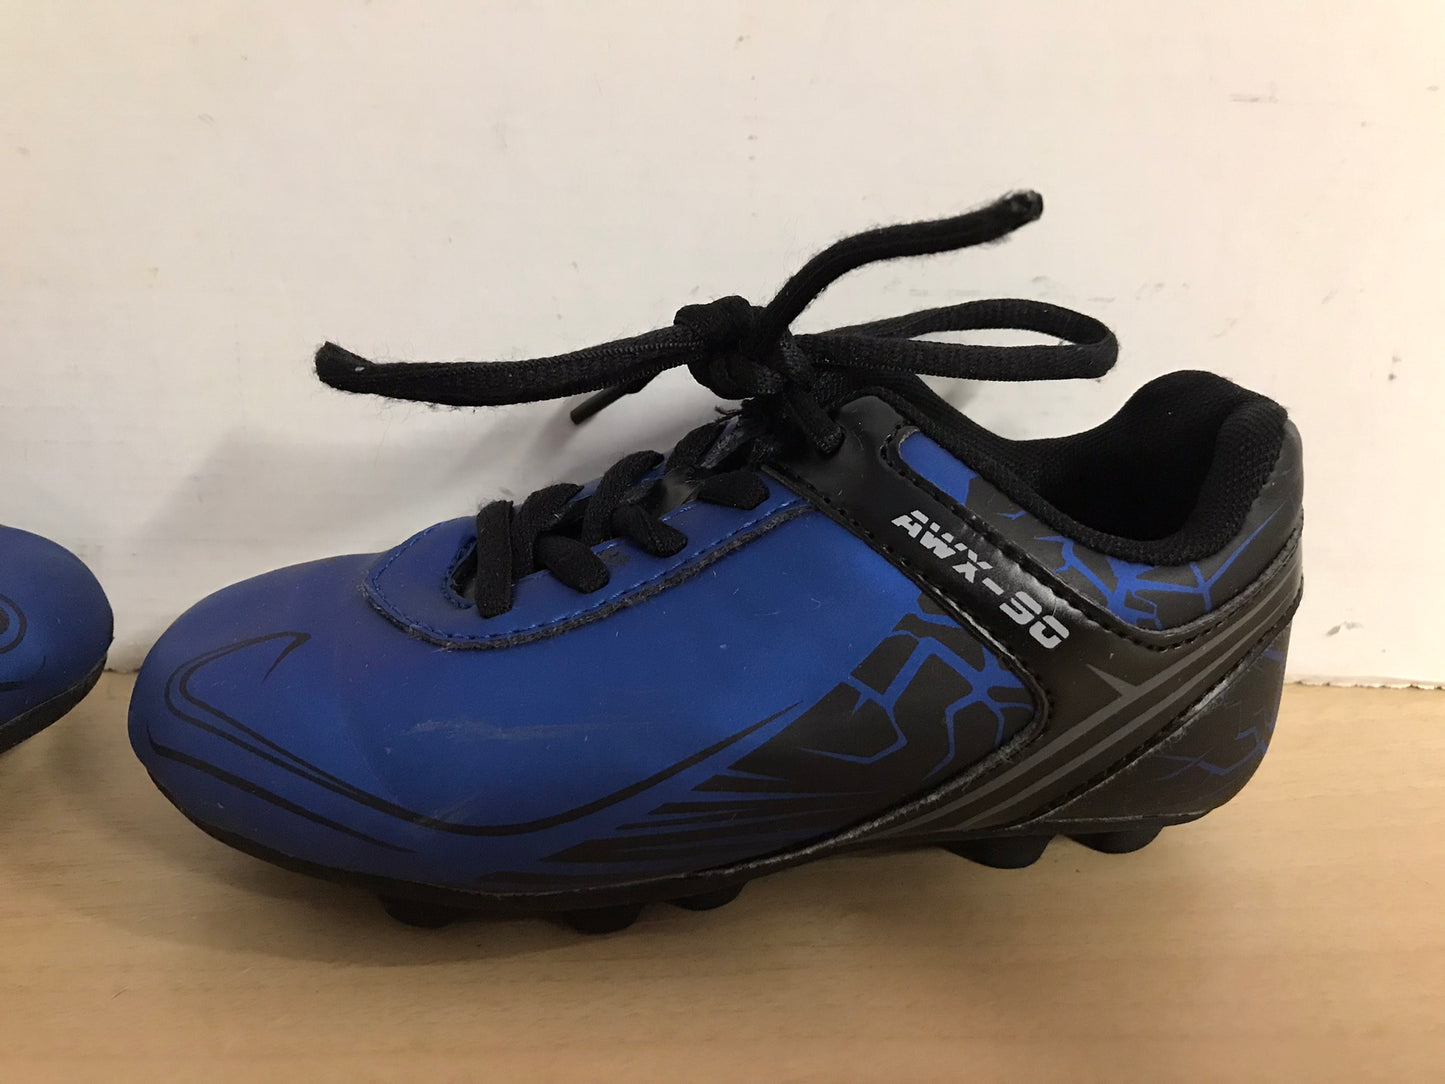 Soccer Shoes Cleats Child Size 11 Toddler Athletic Black Blue Excellent